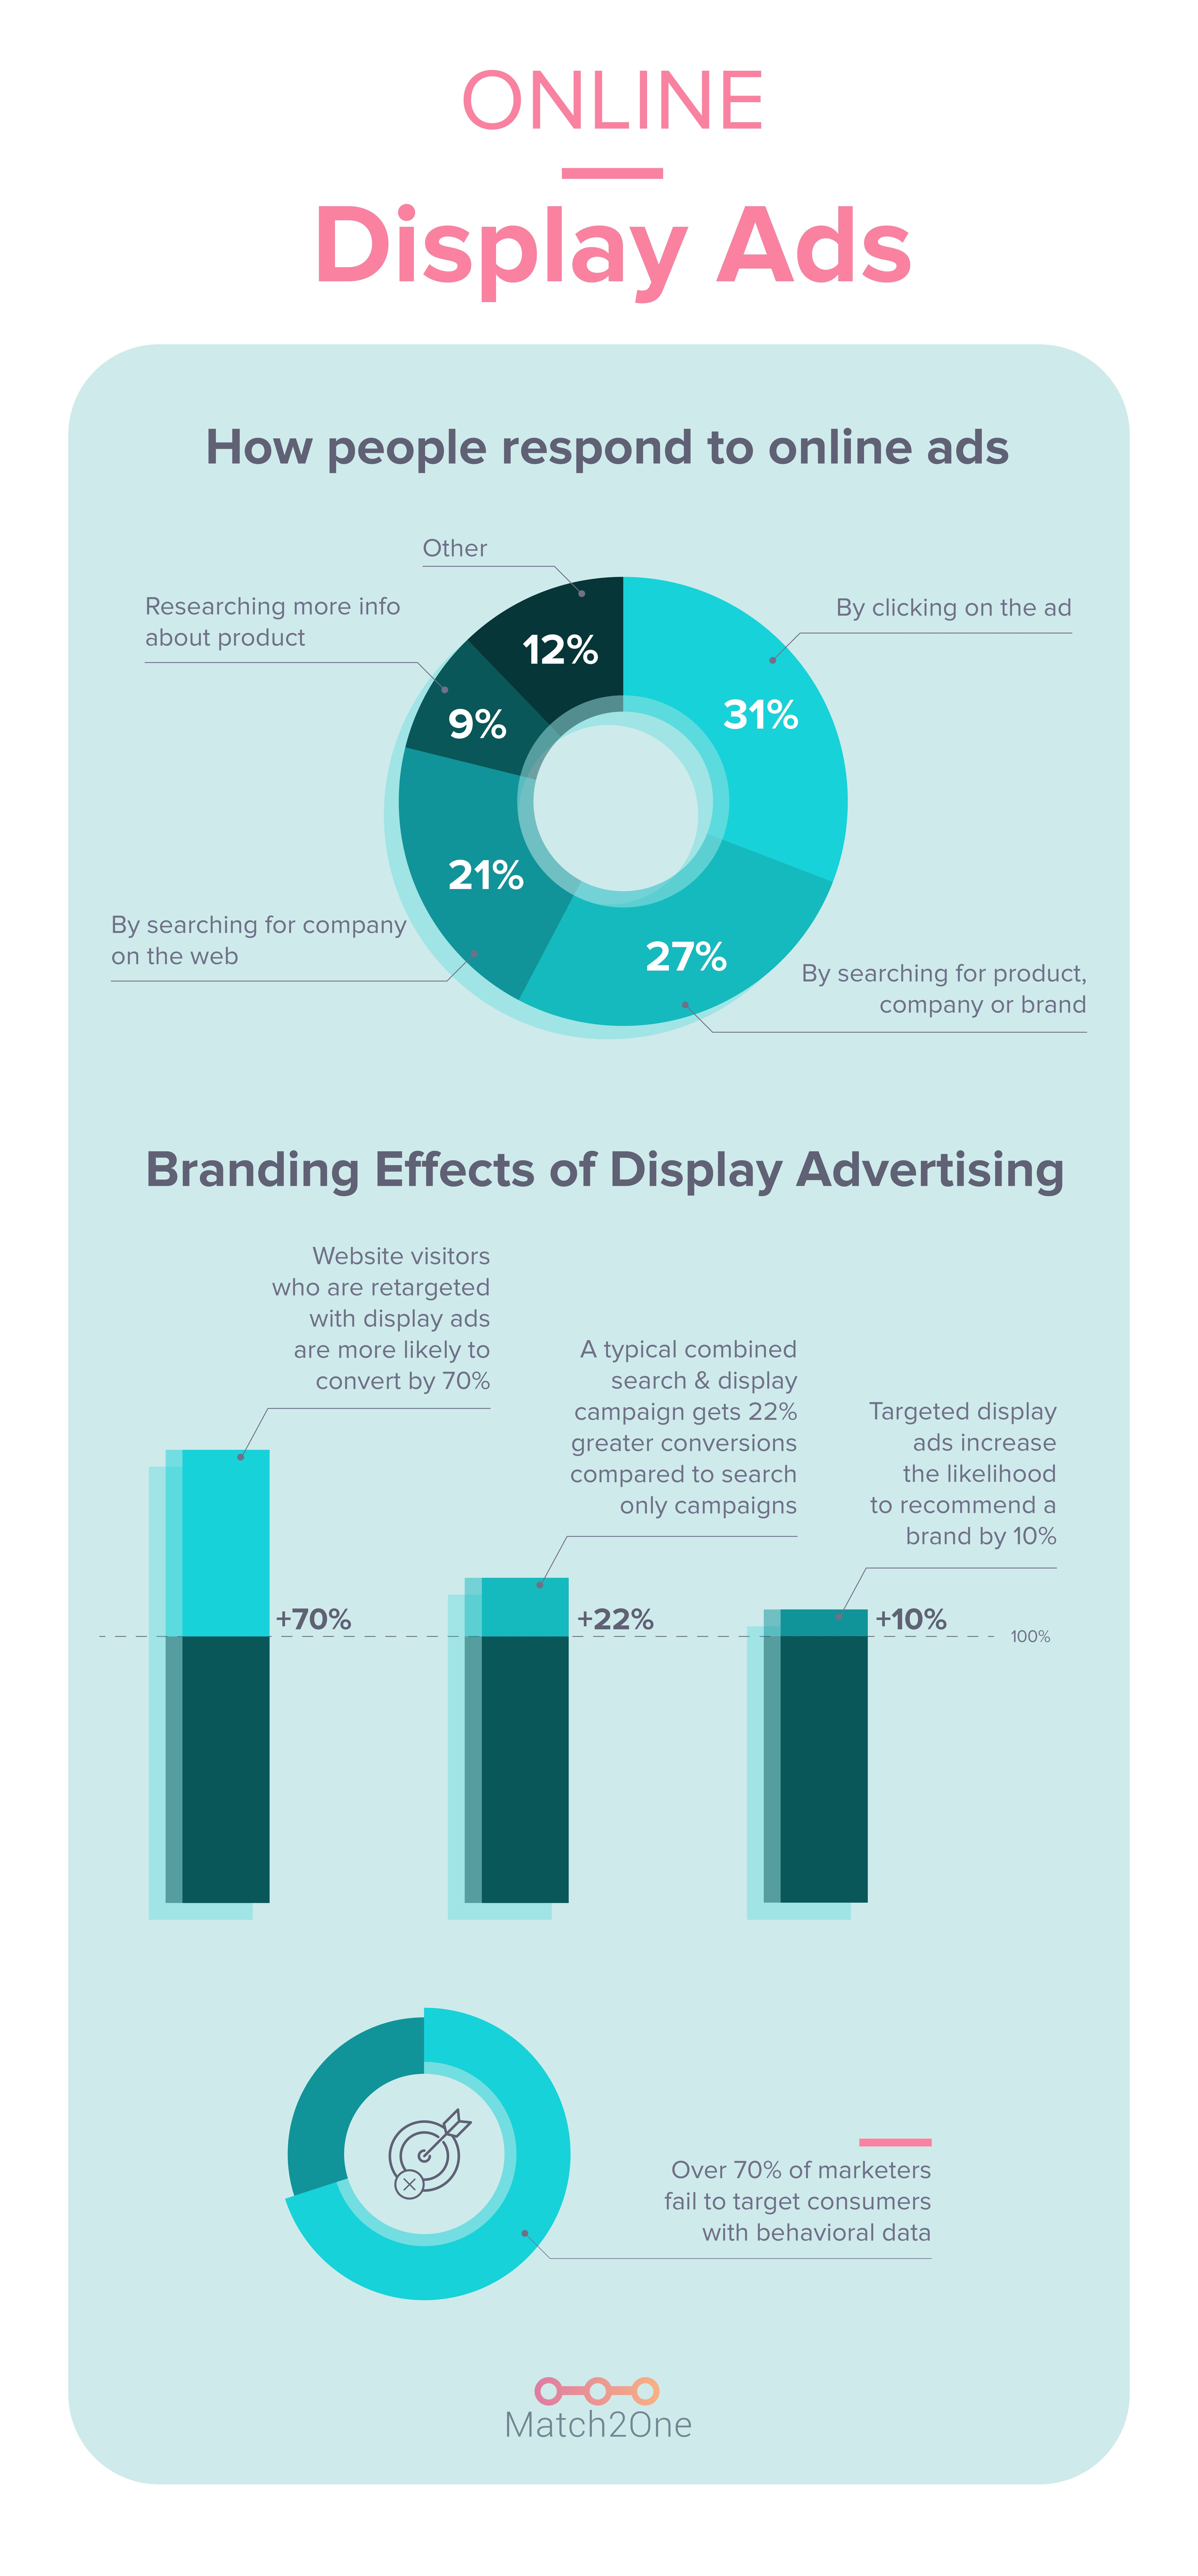 Infographic regarding user response and branding effects of online display advertising. 